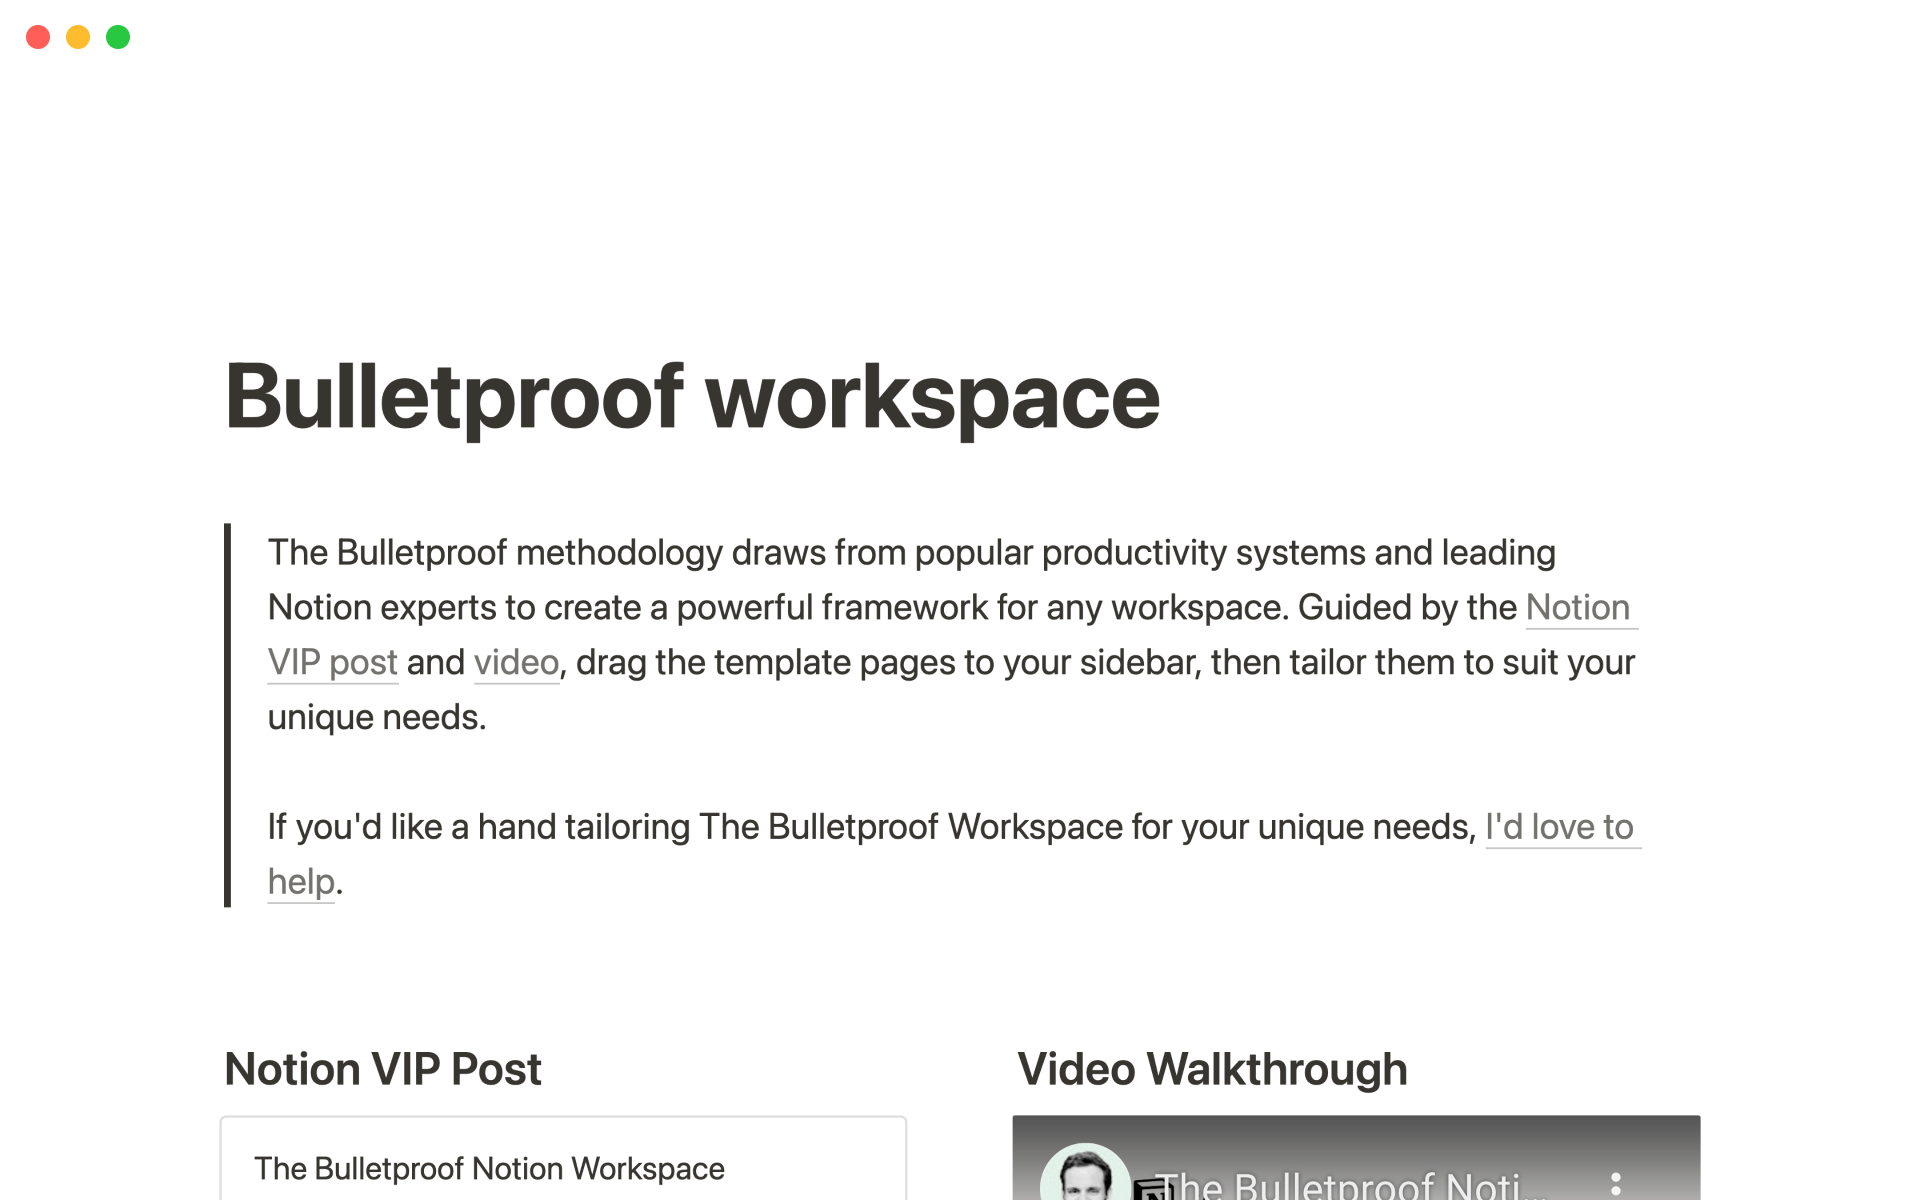 Vista previa de una plantilla para Bulletproof workspace